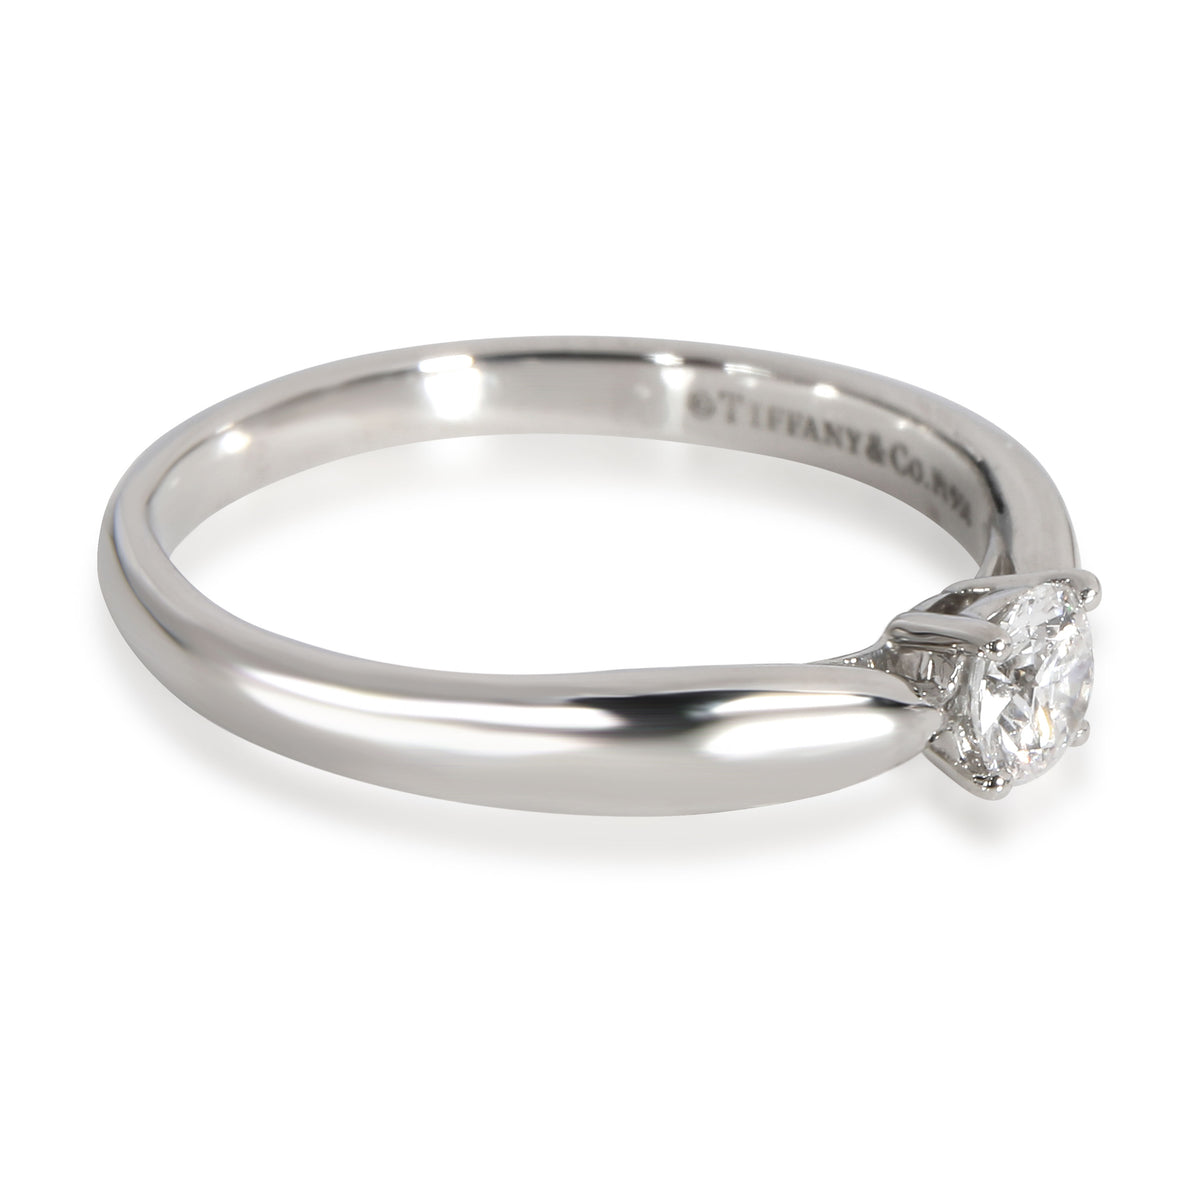 Tiffany & Co. Harmony Diamond Engagement Ring in  Platinum D IF 0.22 CTW